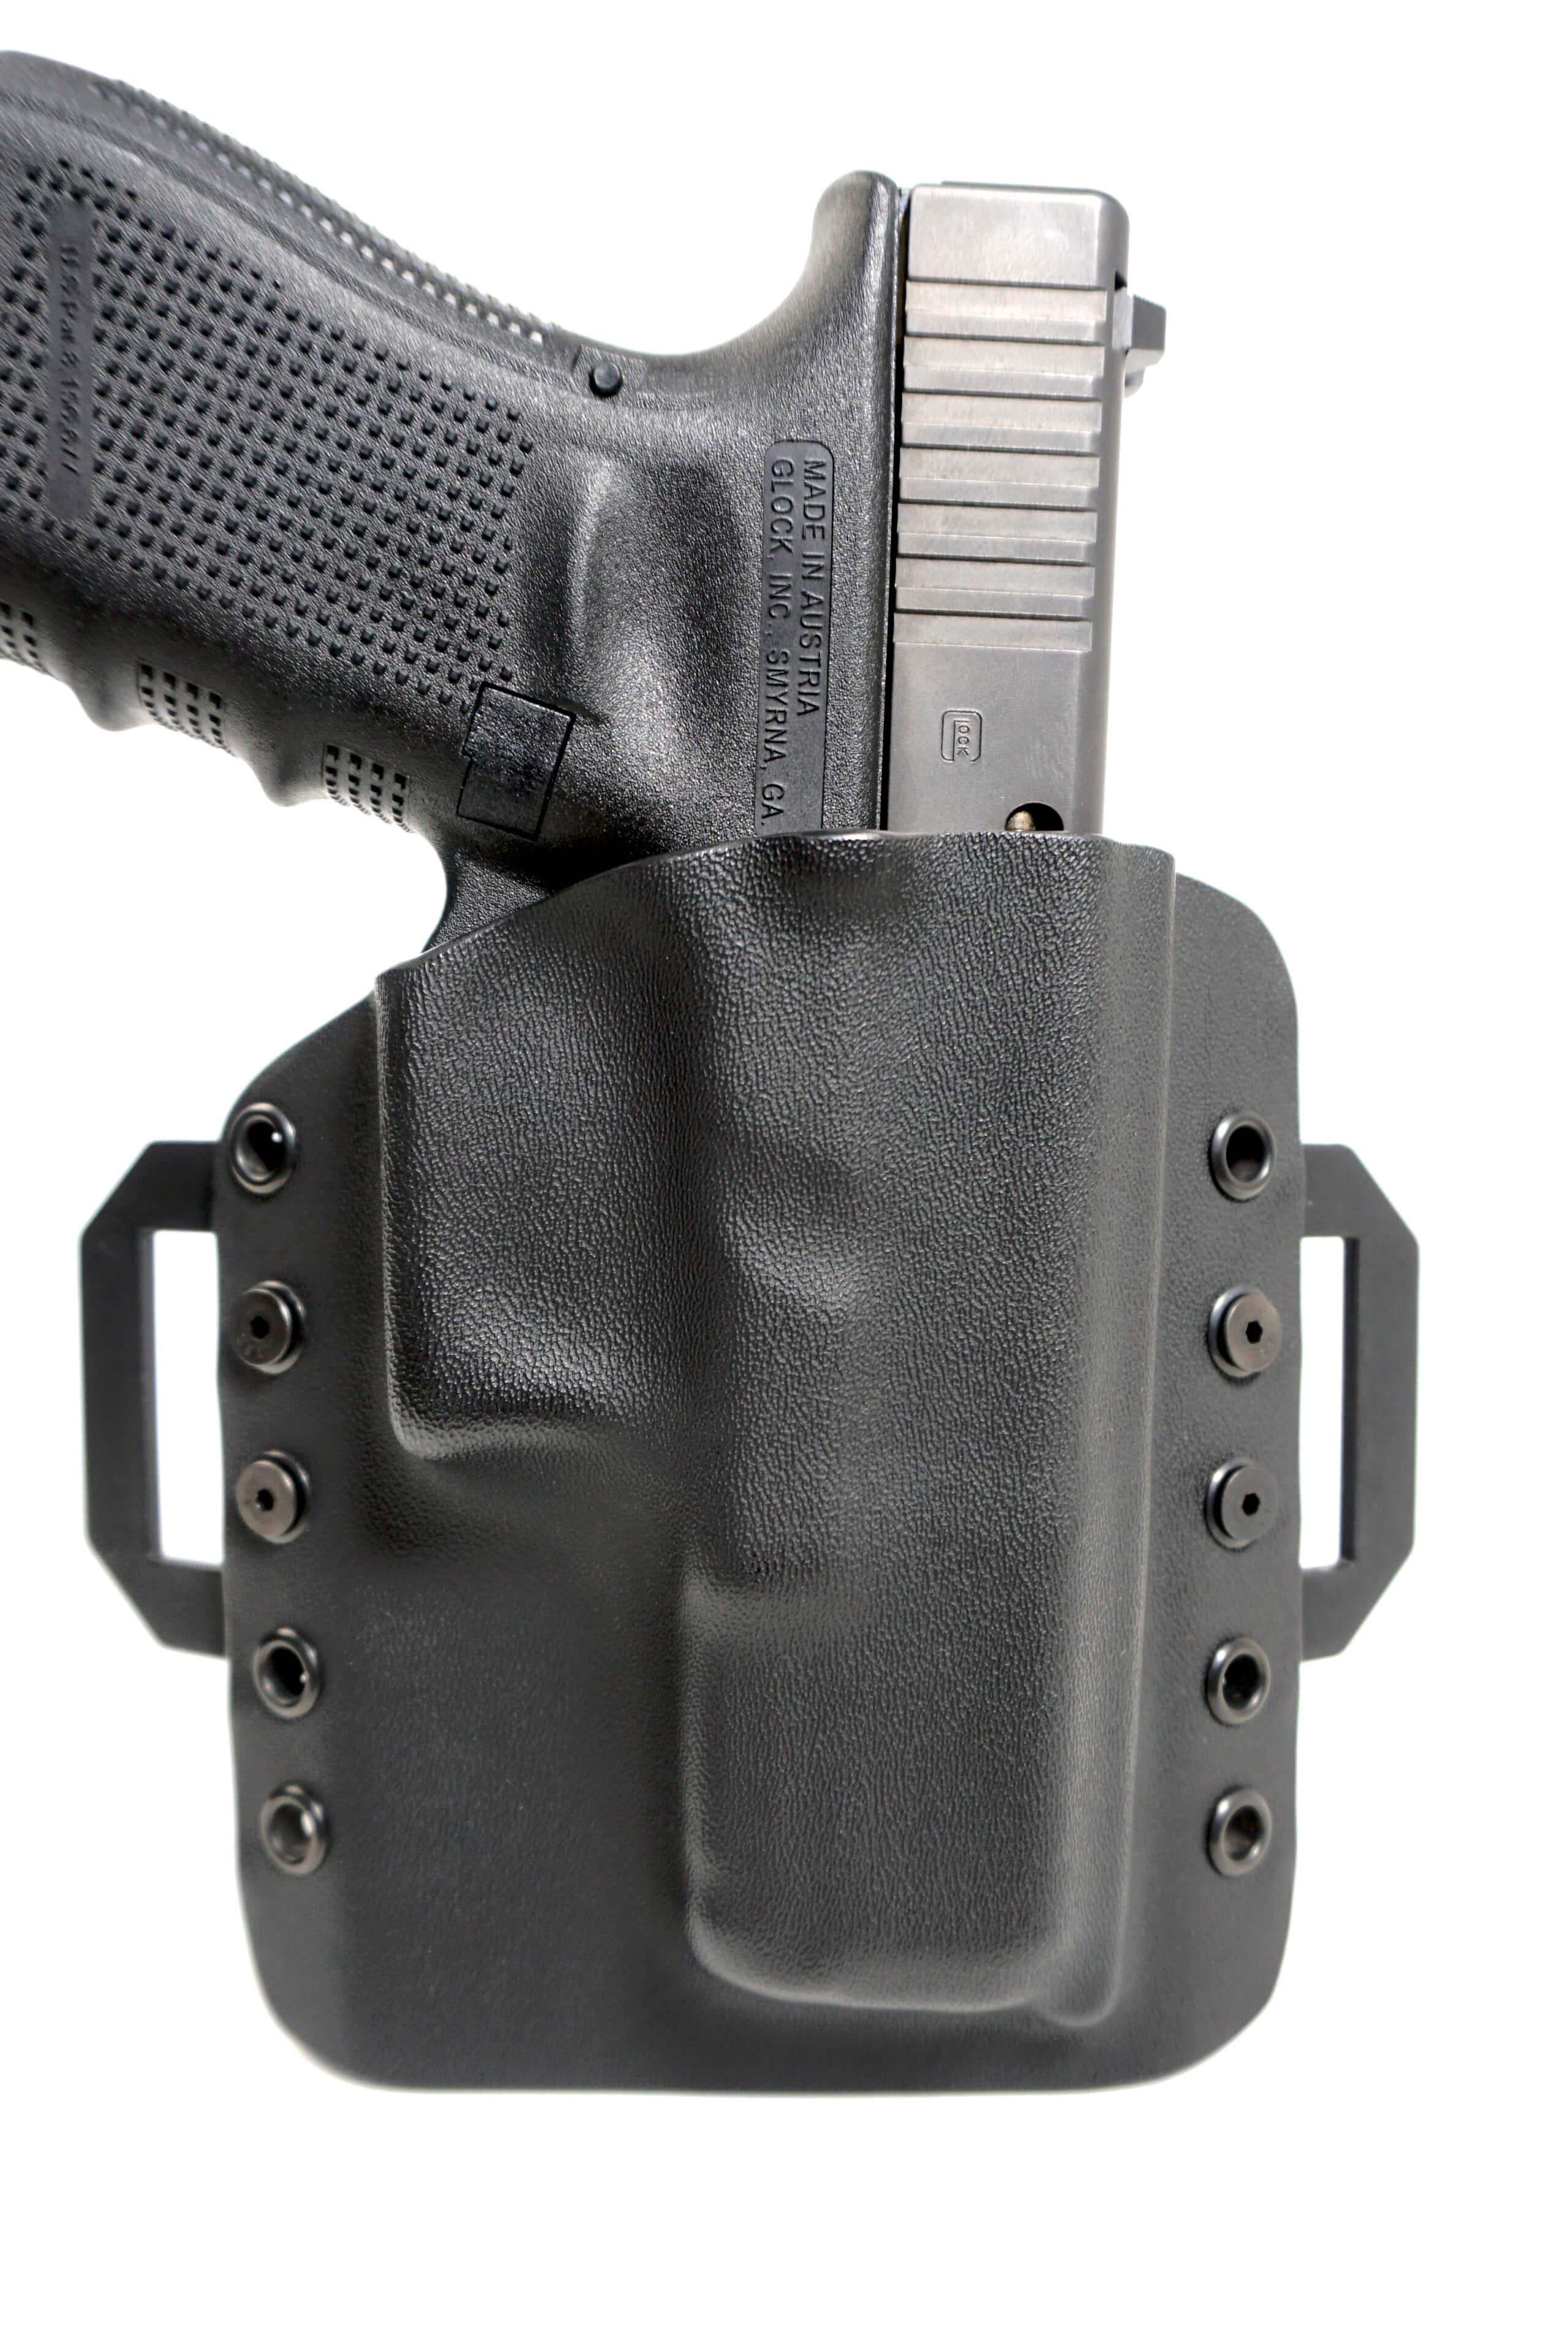 Fits M&P 2.0 Handguns With Light Kydex Burly Man Tactical OWB Kydex holster